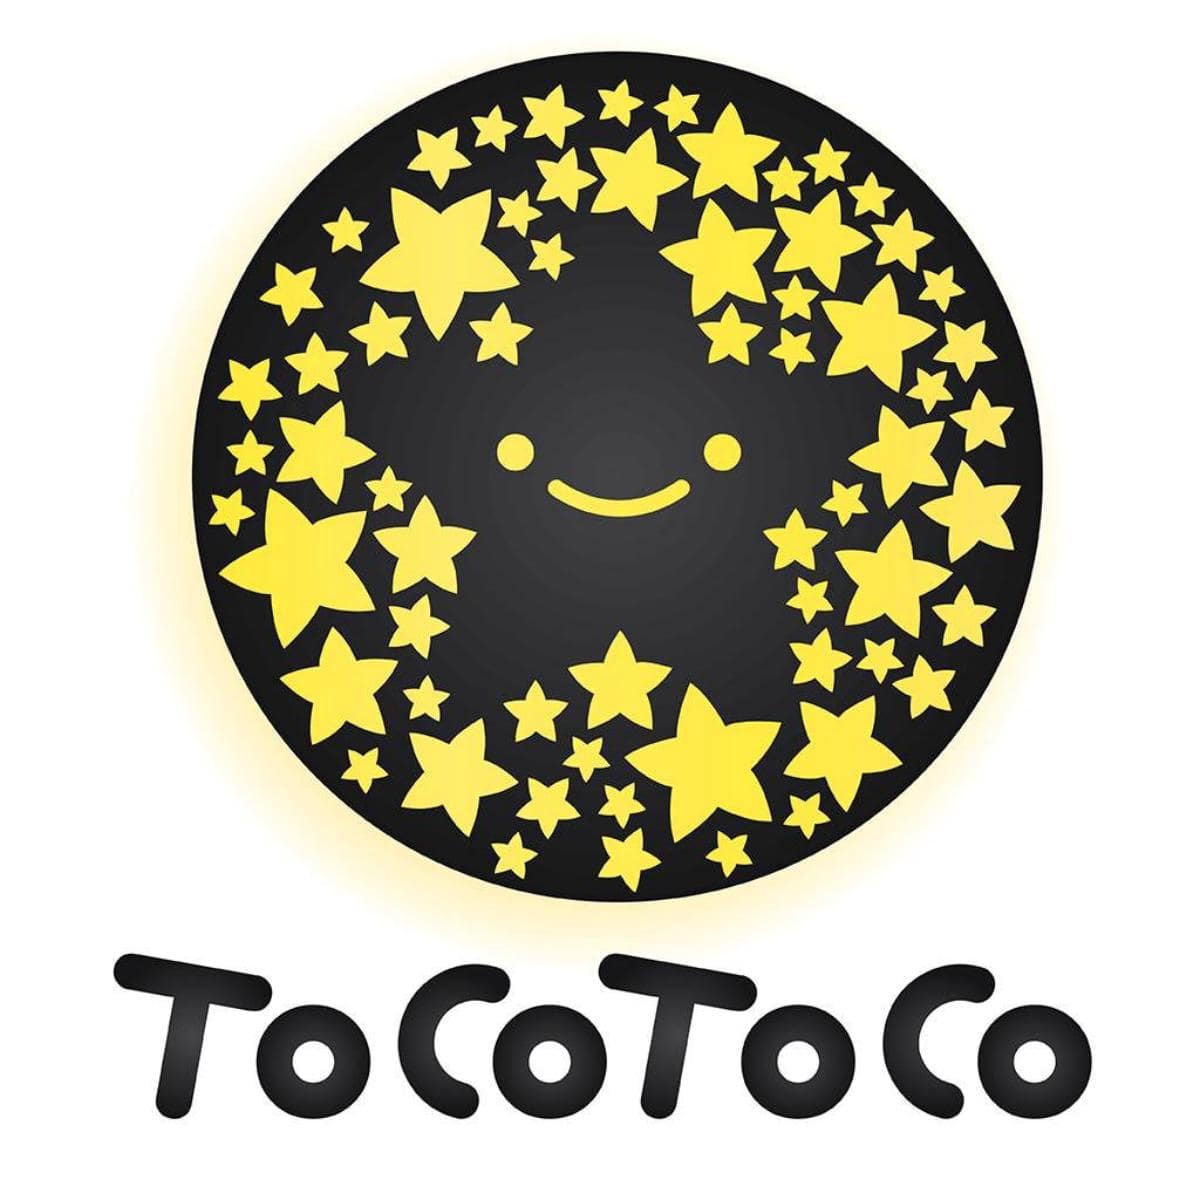 Đồng phục của Tocotoco